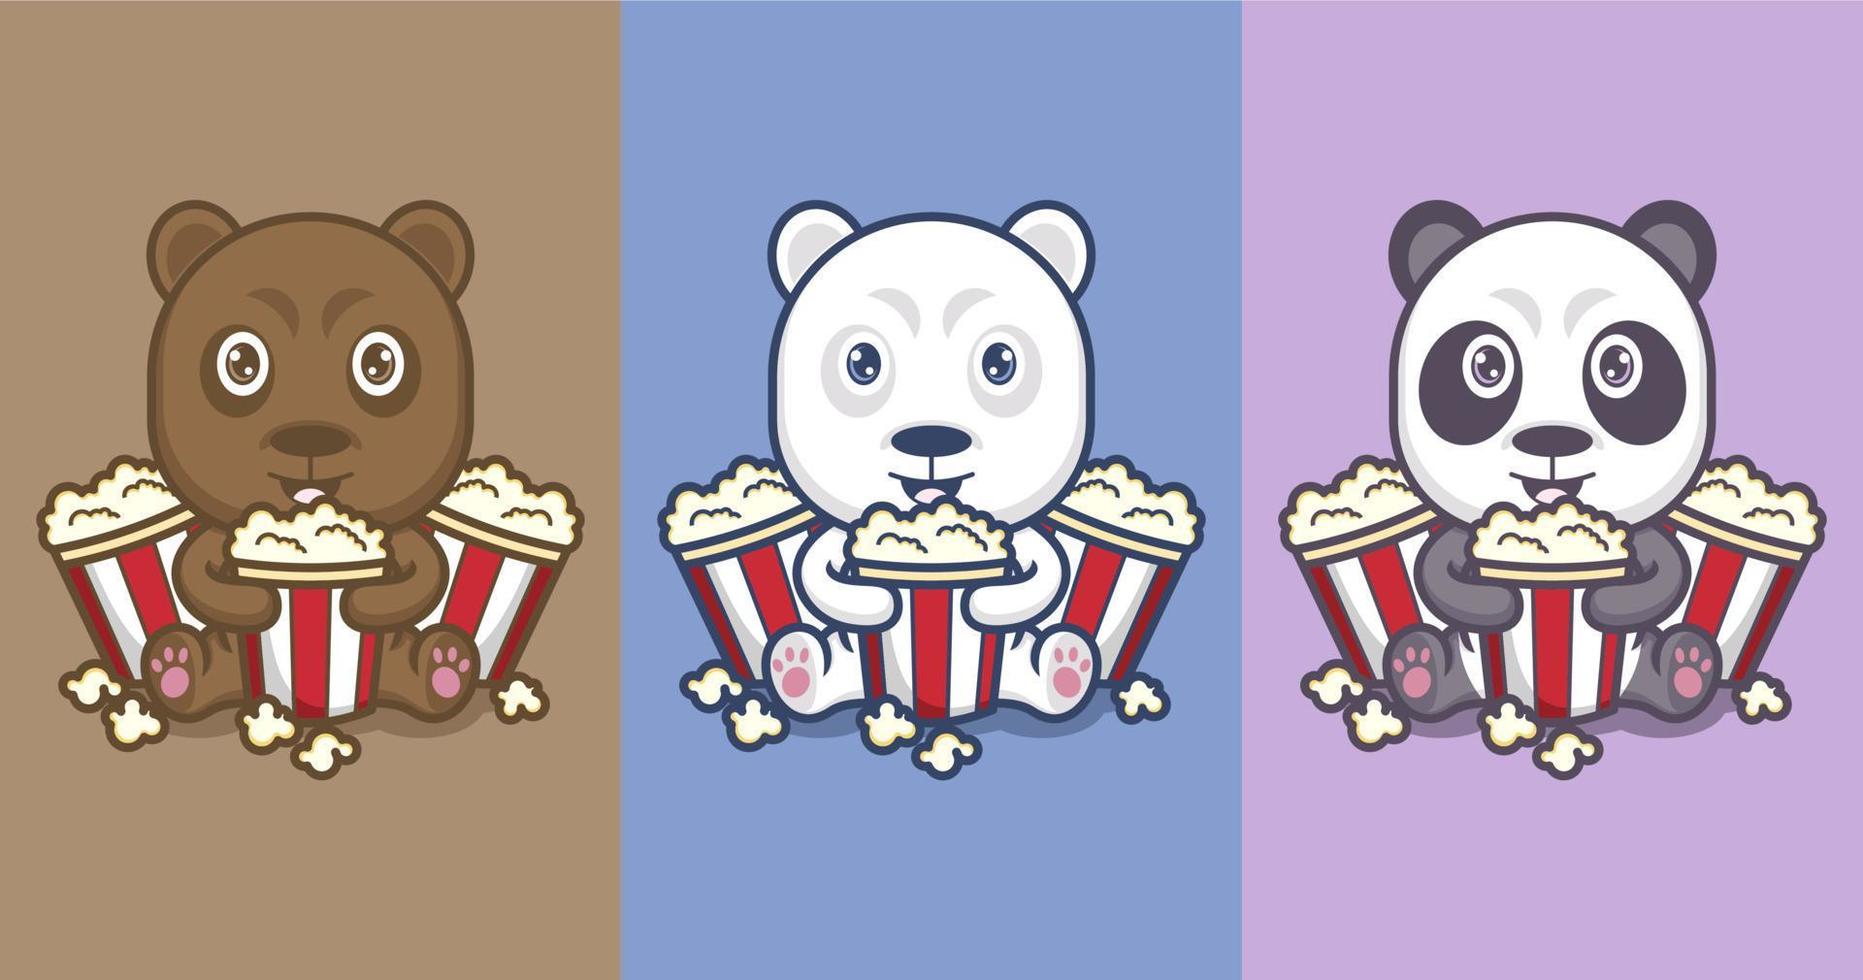 schattig tekenfilm polair beer en panda vector